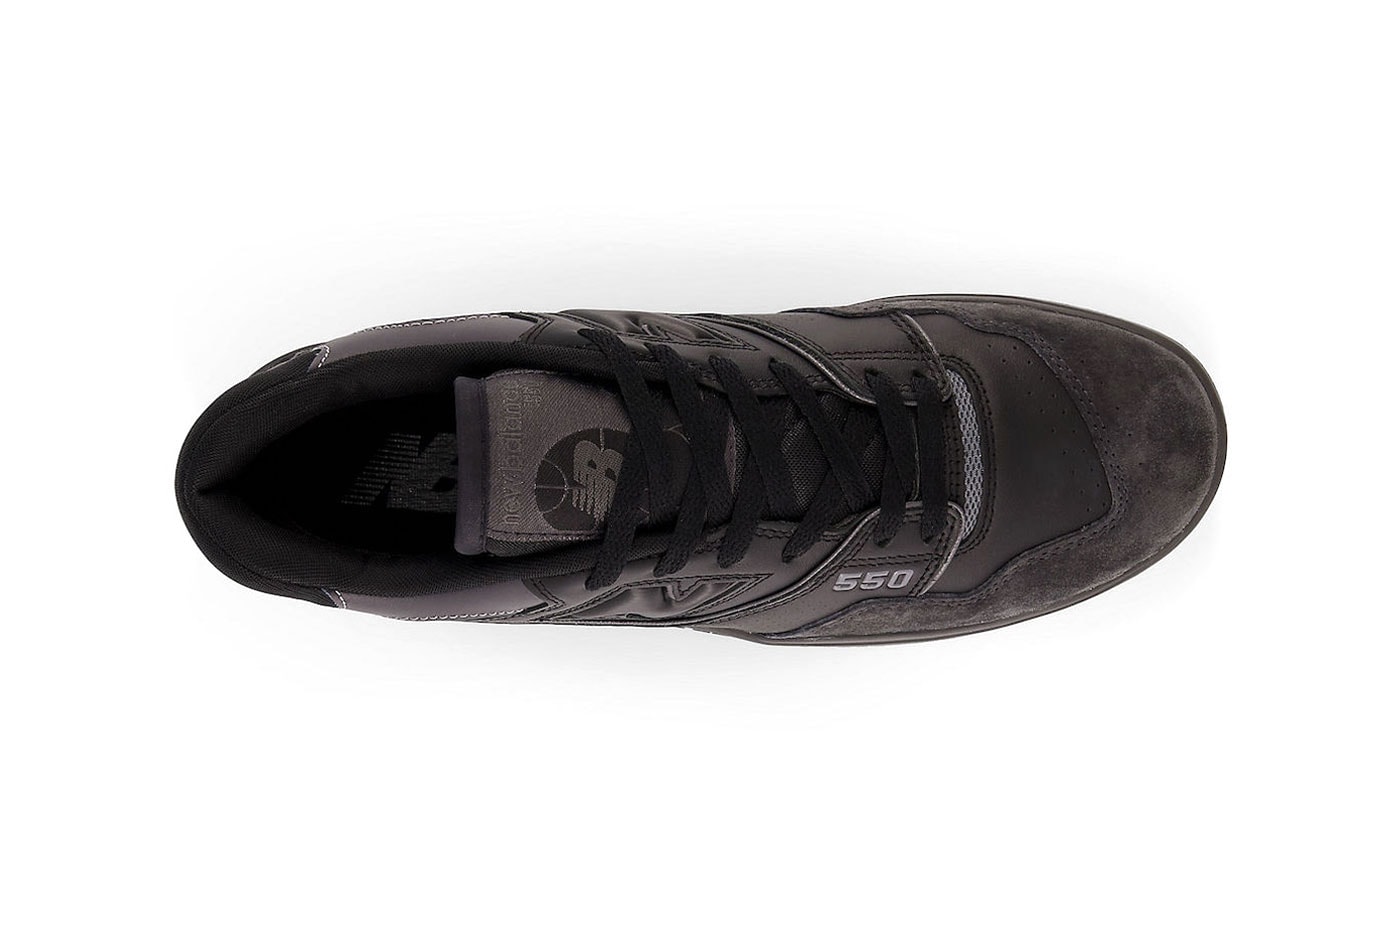 New Balance 550 "Black Gum" Has Surfaced BB550BGU sleek all black basketaball low top nb 